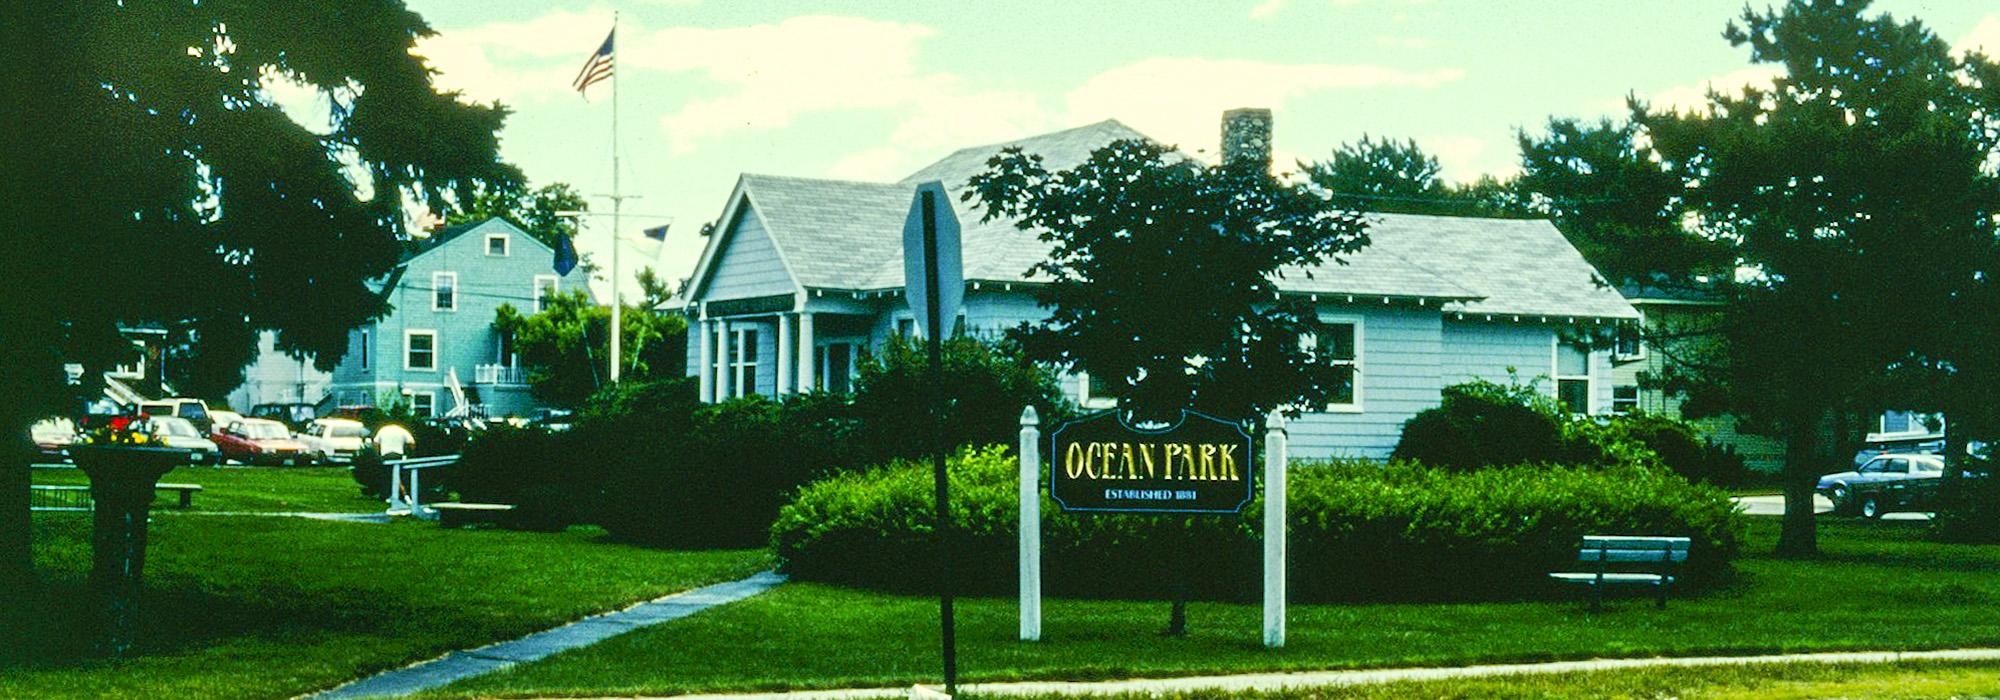 Land of Ocean Park Association, Old Orchard Beach, ME